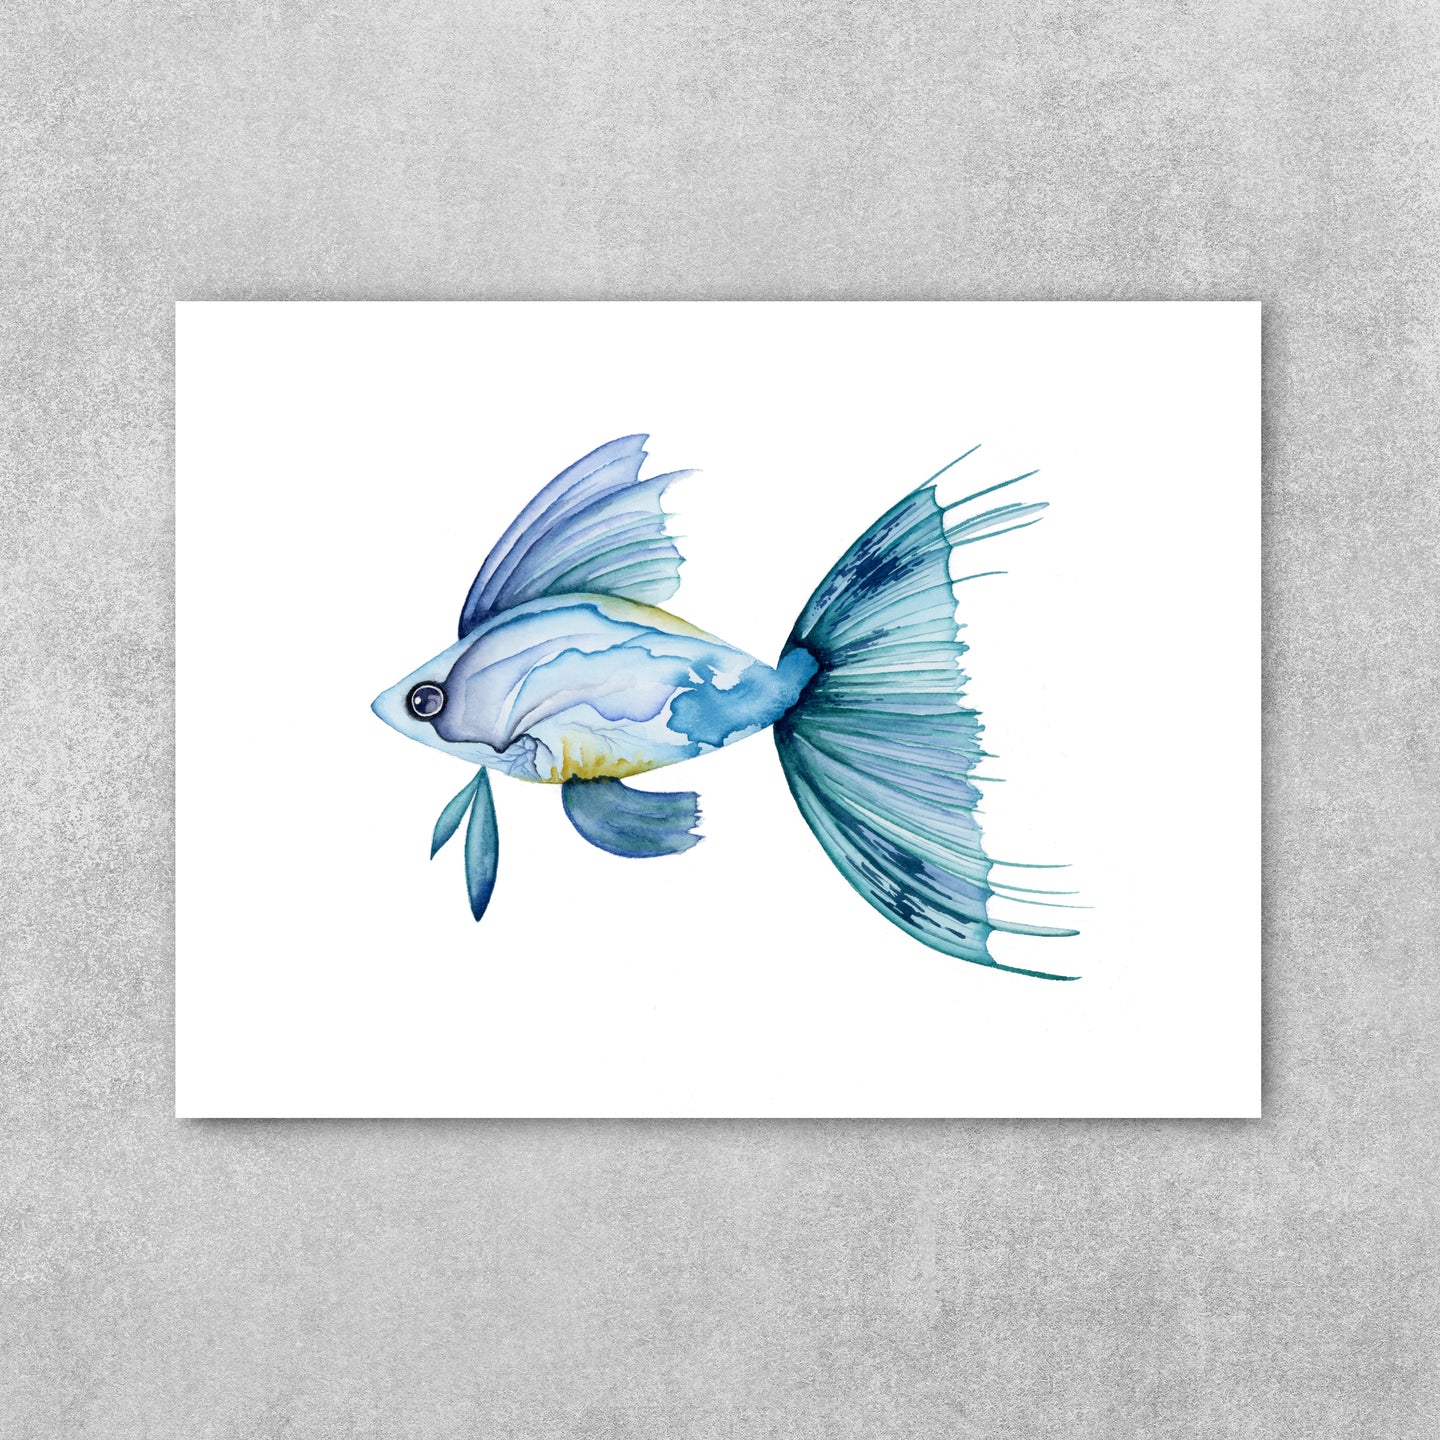 “Wishing” Fine Art Print - Tropical Fish (2019)